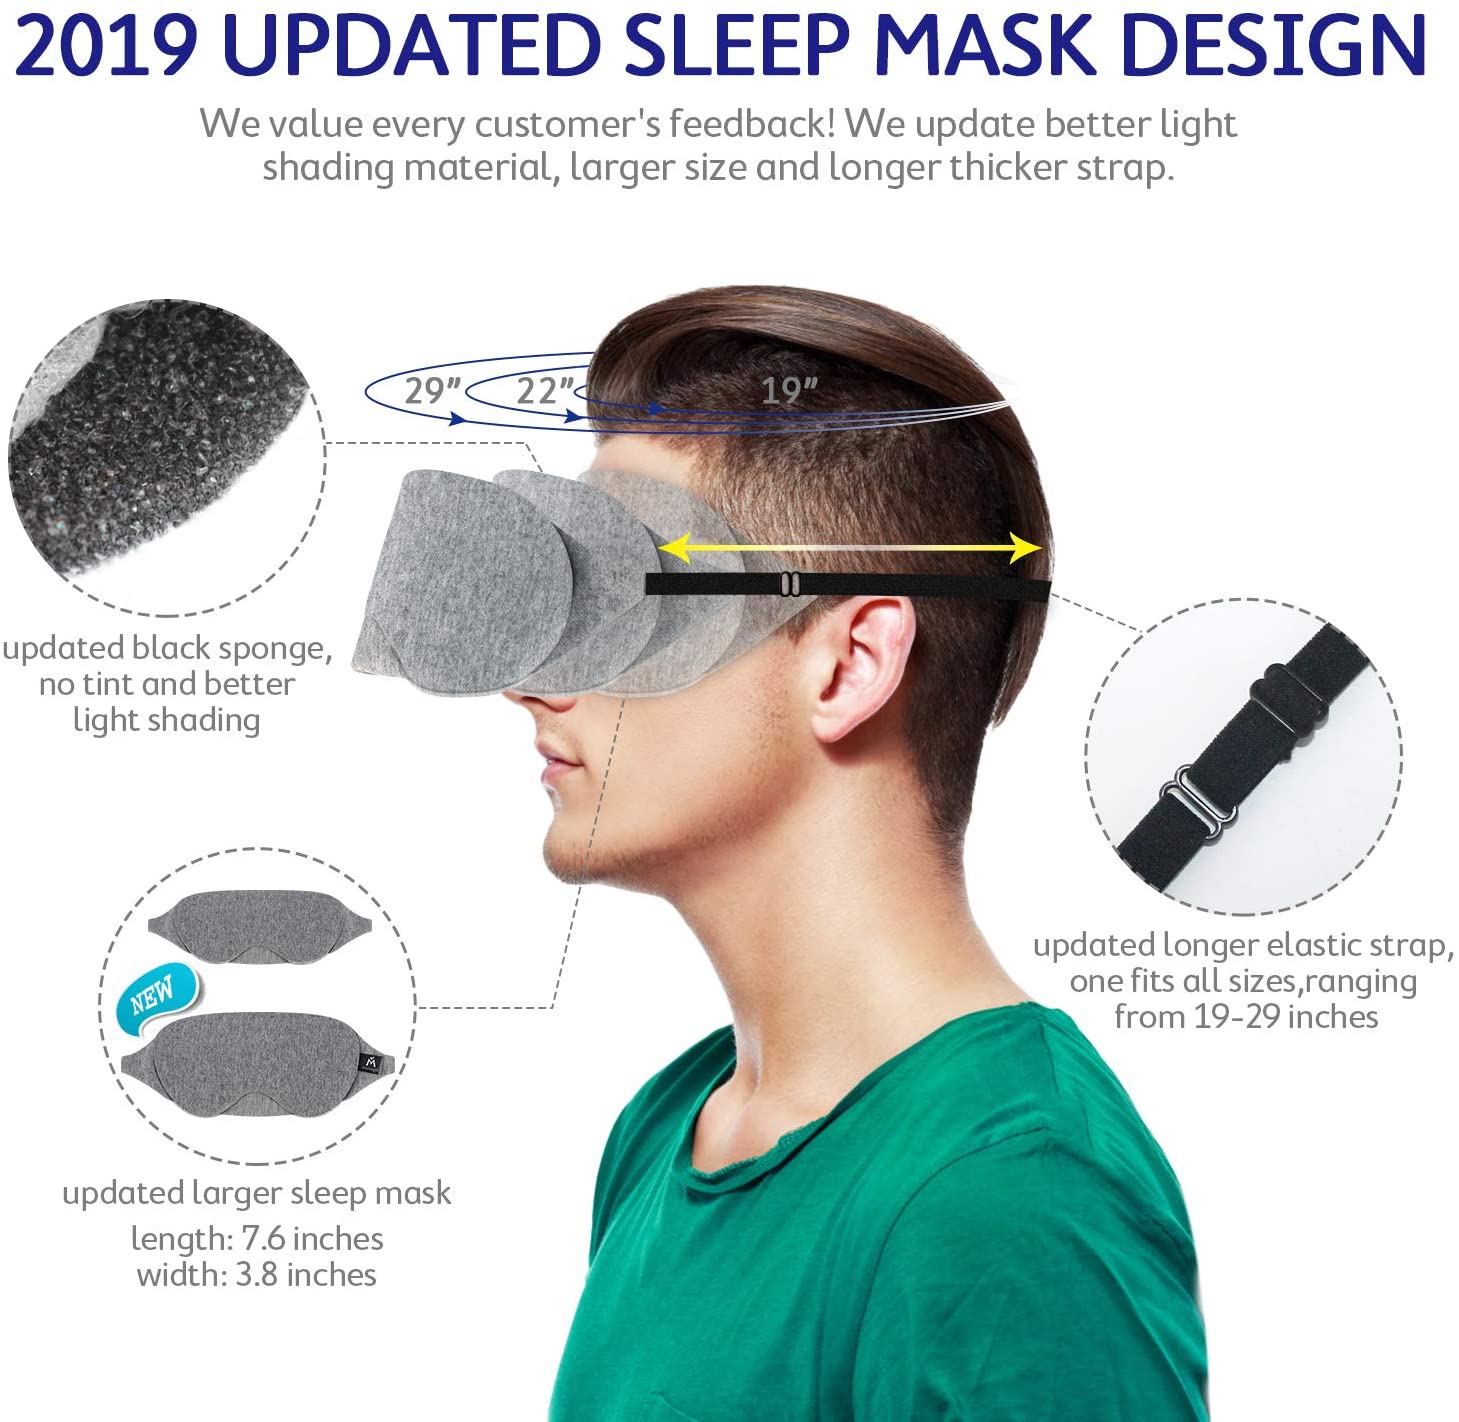 Mavogel Cotton Sleep Eye Mask, Soft and Comfortable  for Travel/Sleeping/Shift Work, Grey - image 5 of 6